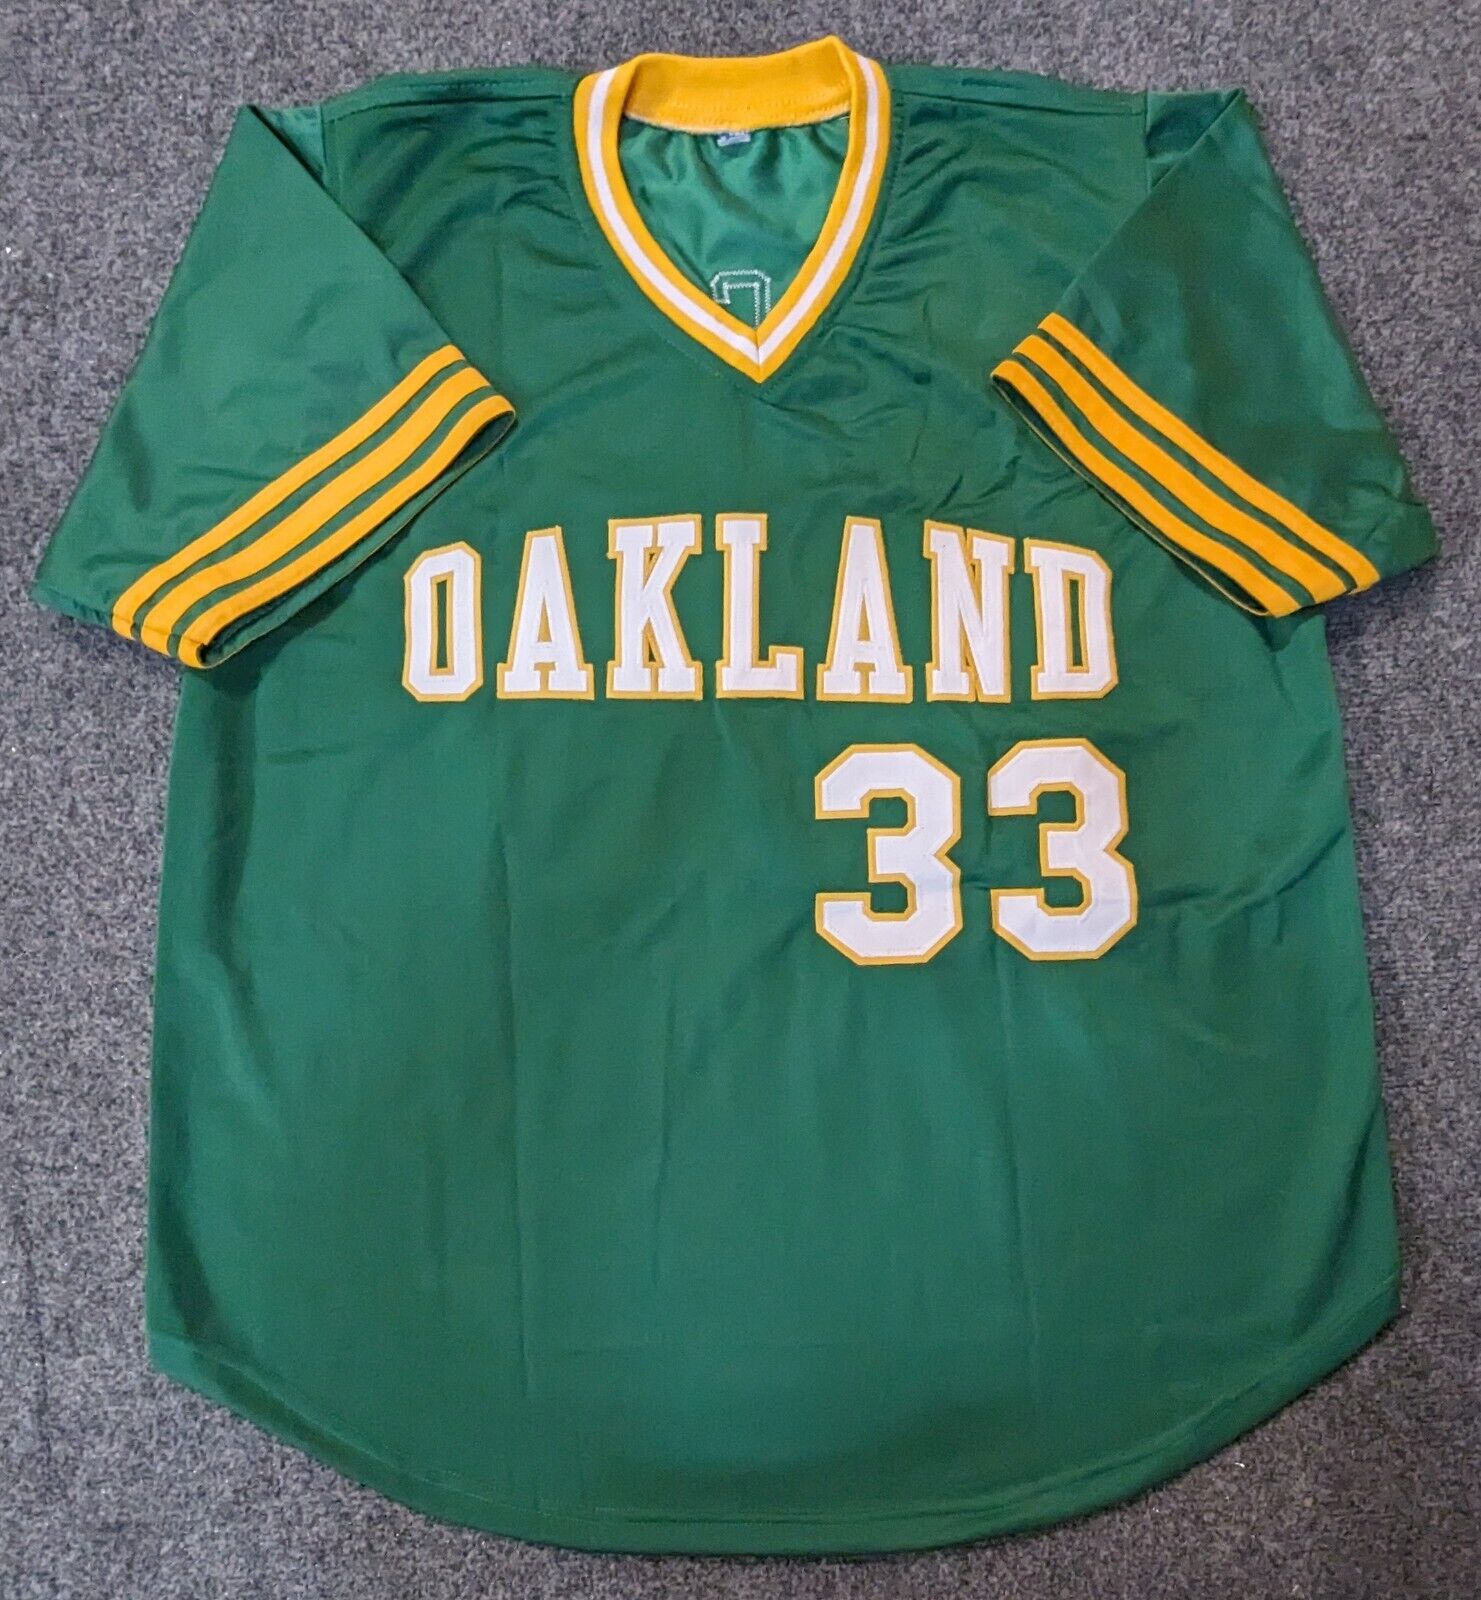 Autographed Oakland Athletics Jerseys, Autographed A's Jerseys, A's  Autographed Memorabilia